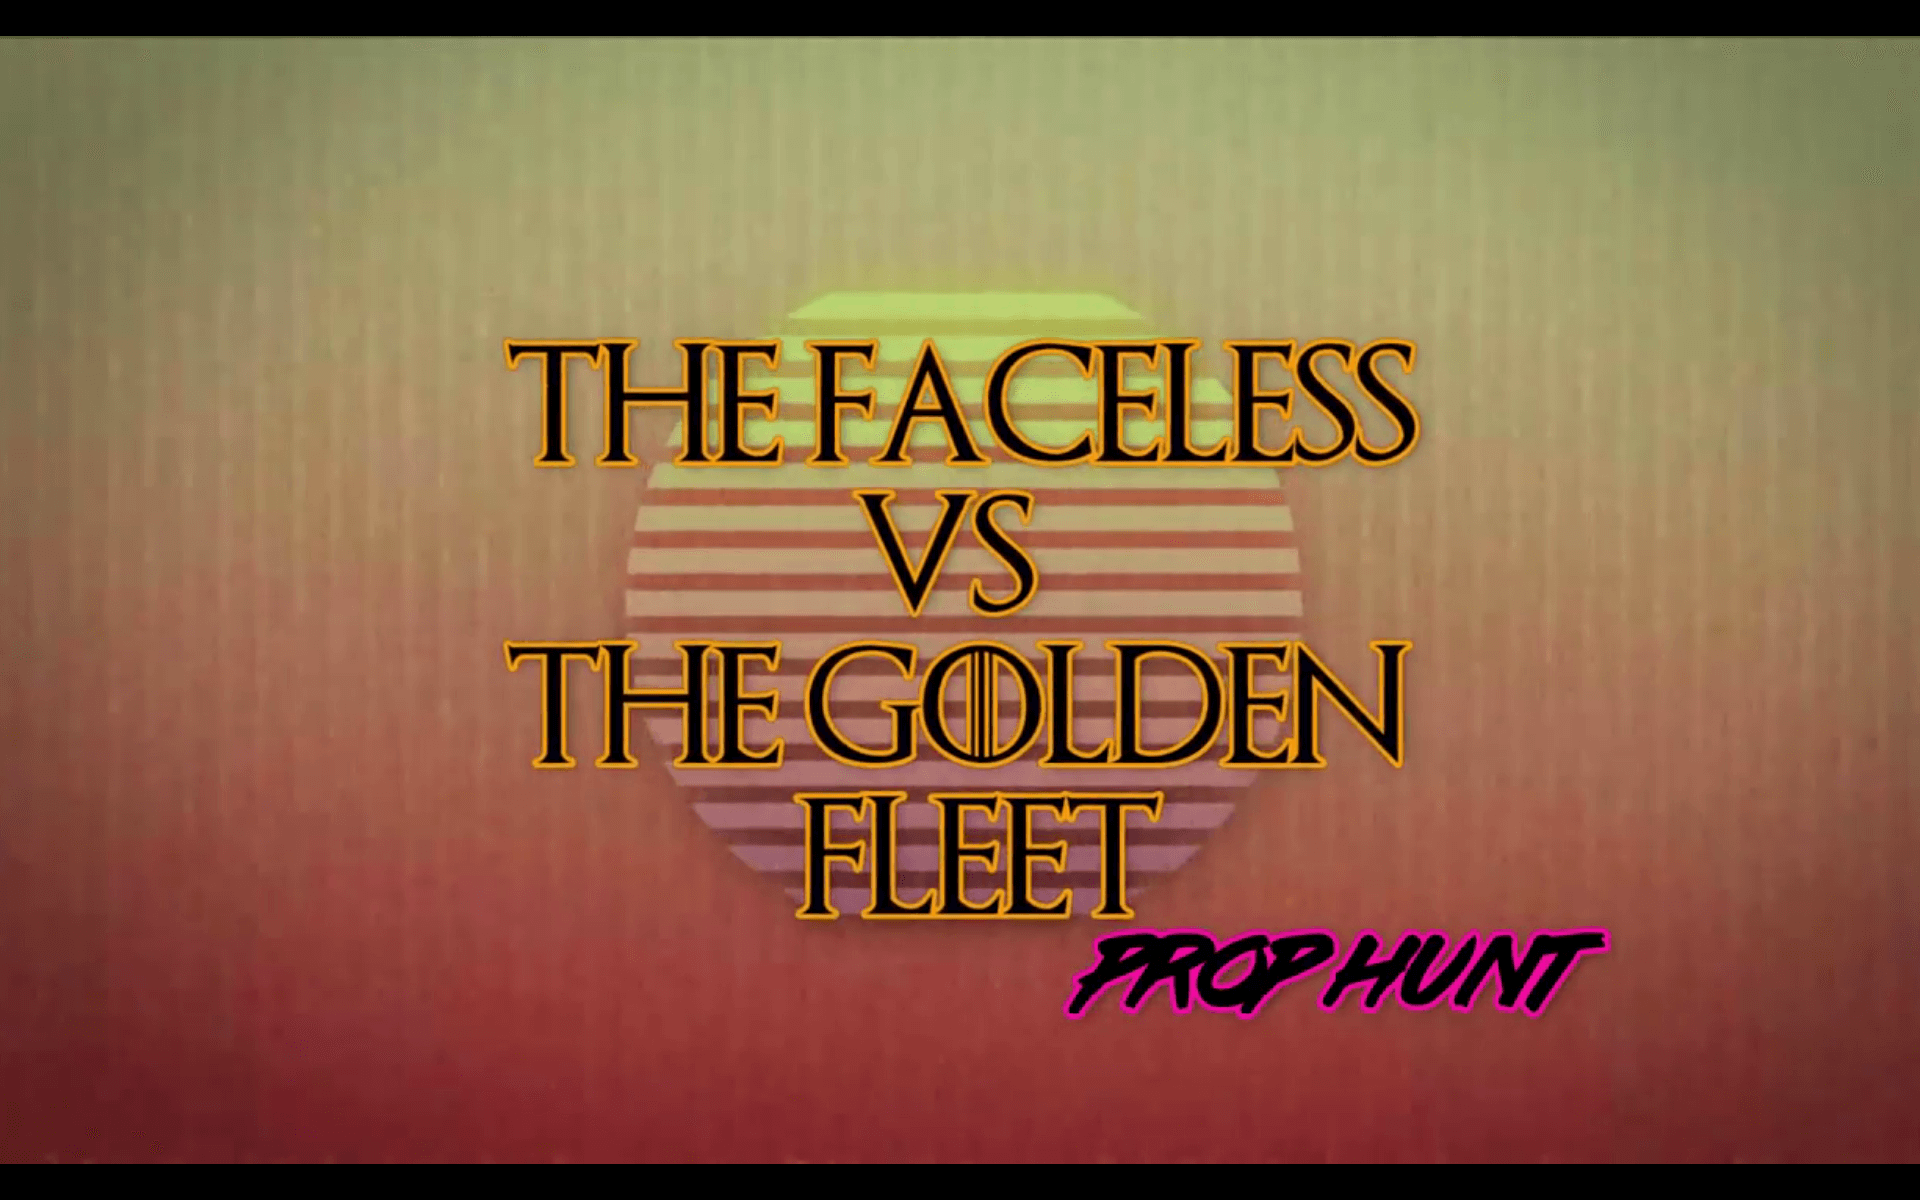 THE FACELESS VS GOLDEN FLEET - PROP HUNT